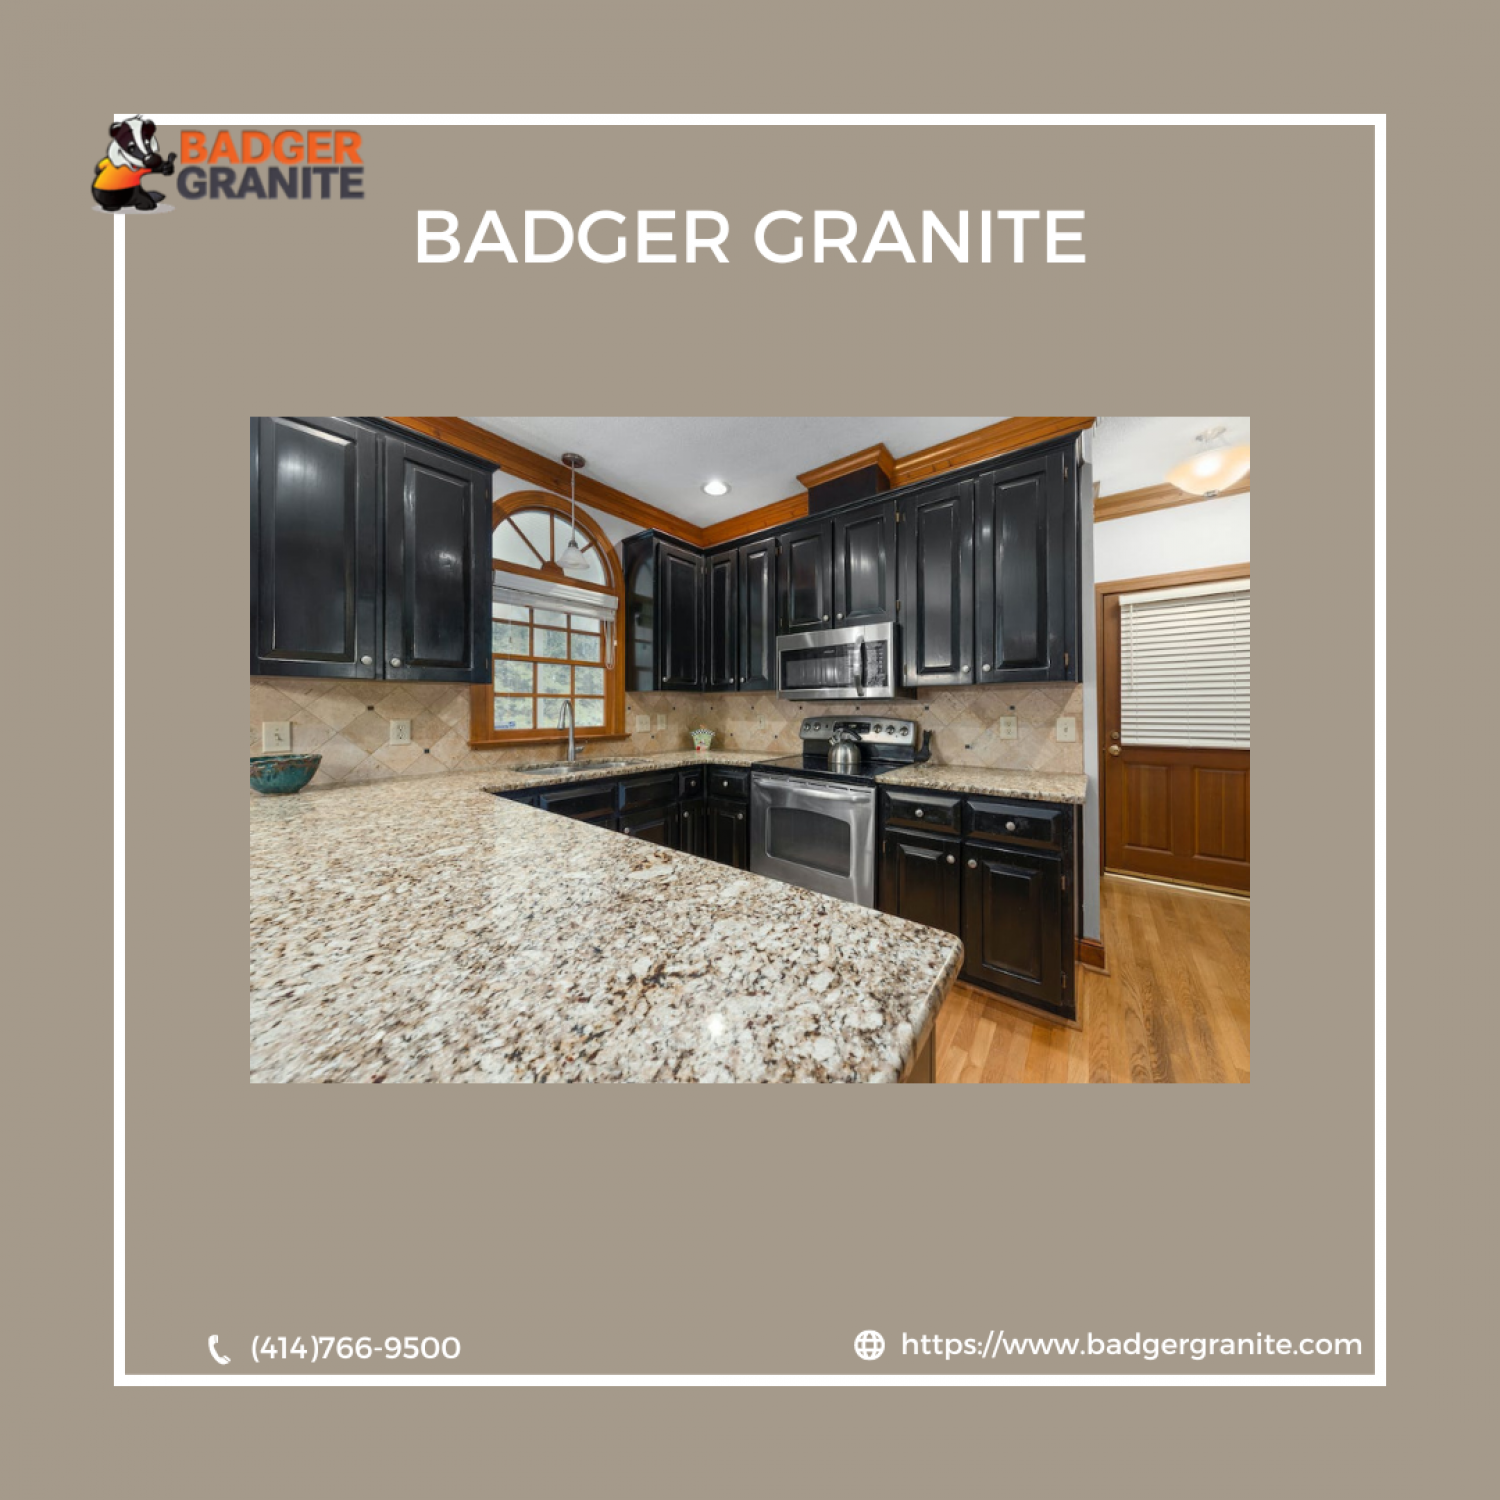 Badger Granite Infographic